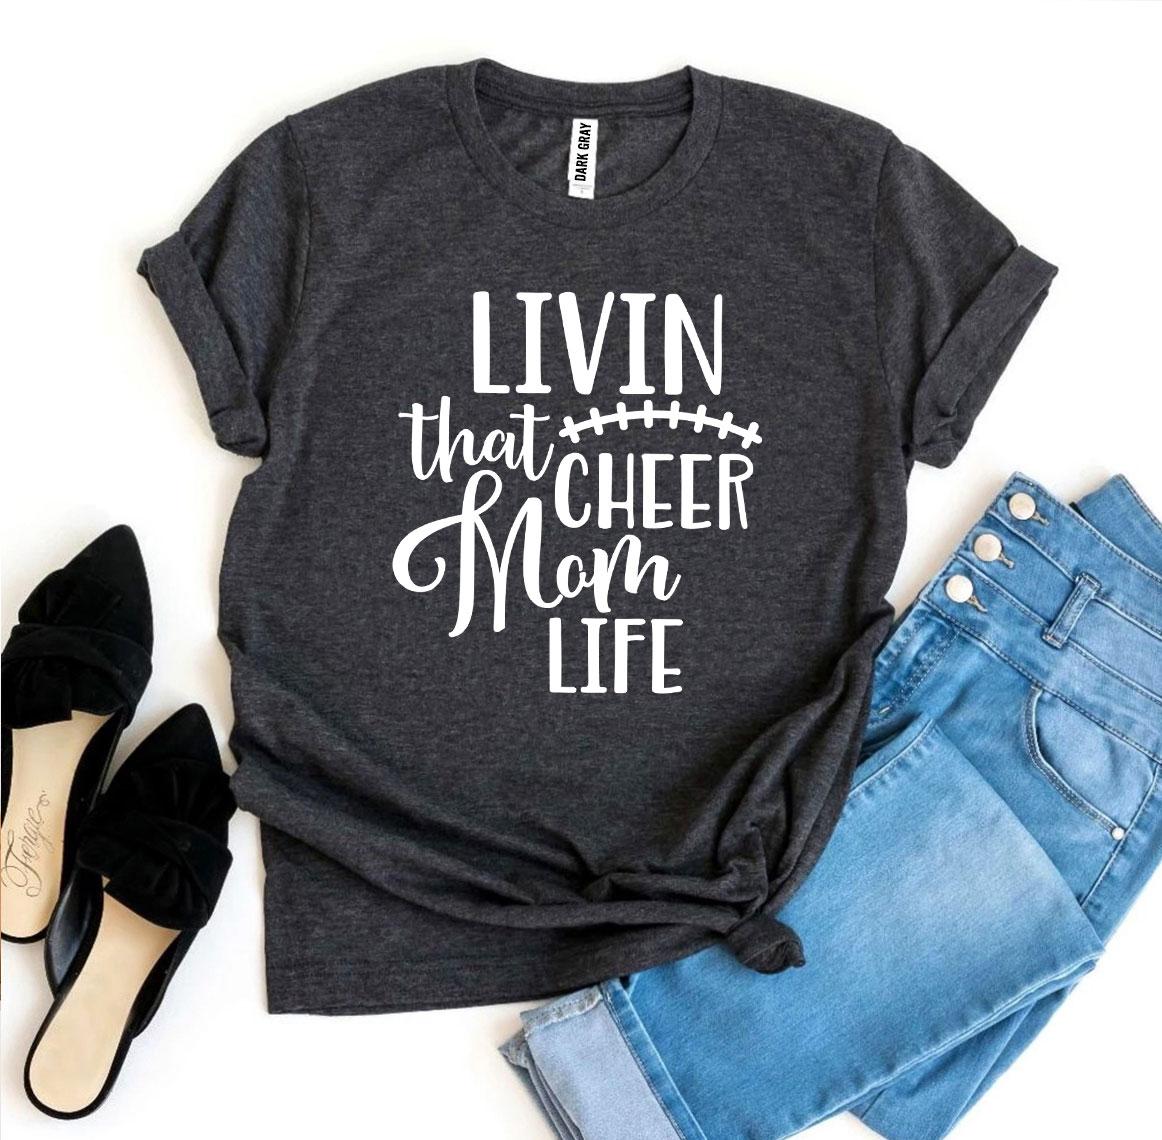 Livin That Cheer Mom Life T-shirt